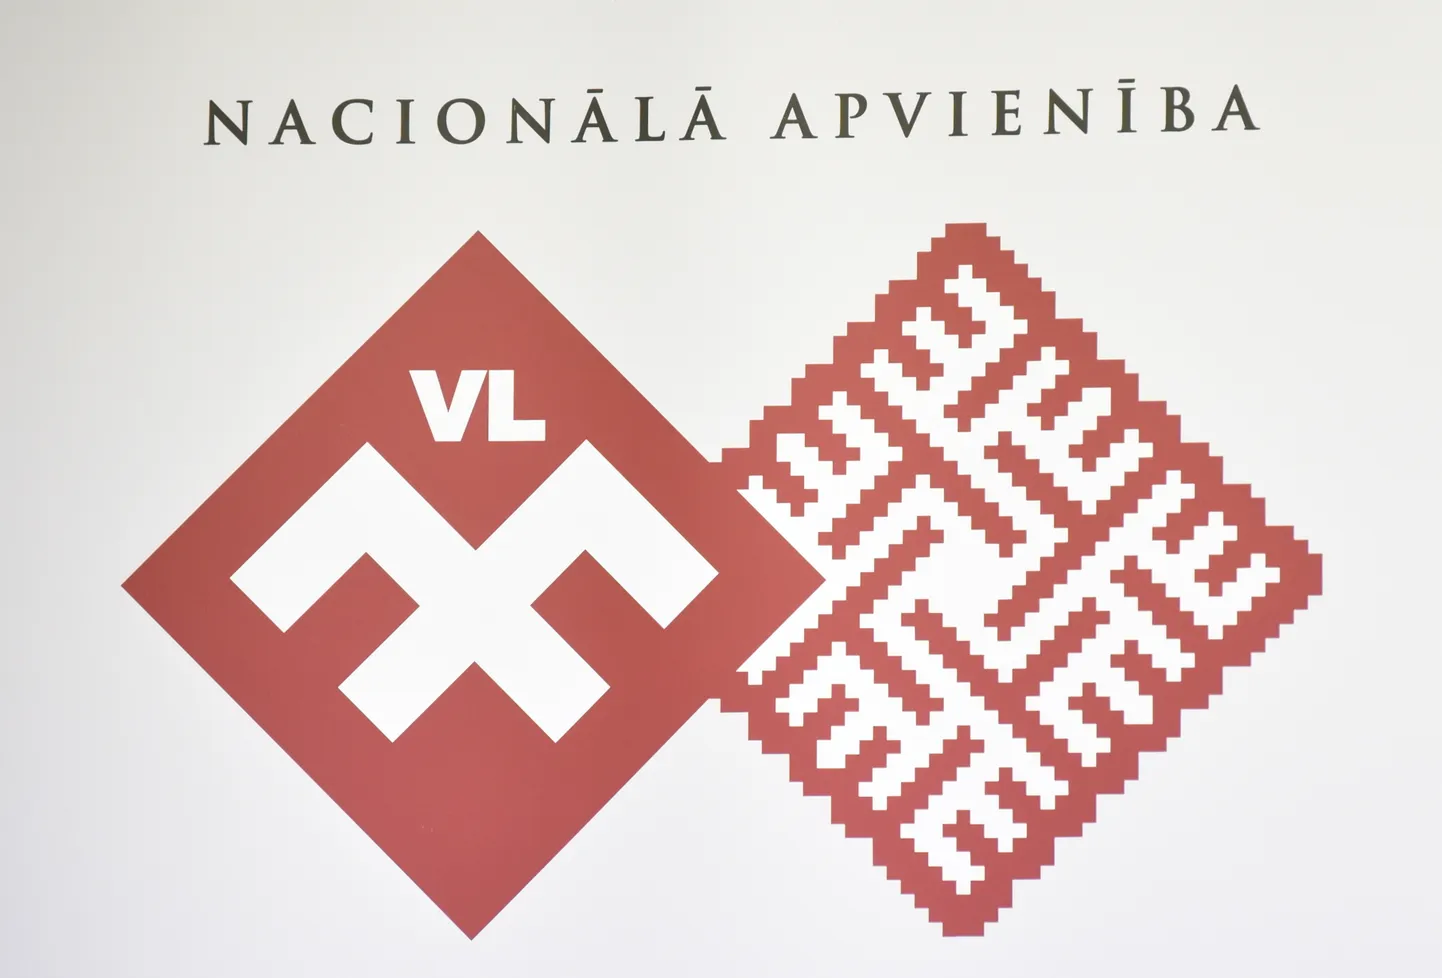 Лого партии "Нацобъединение"